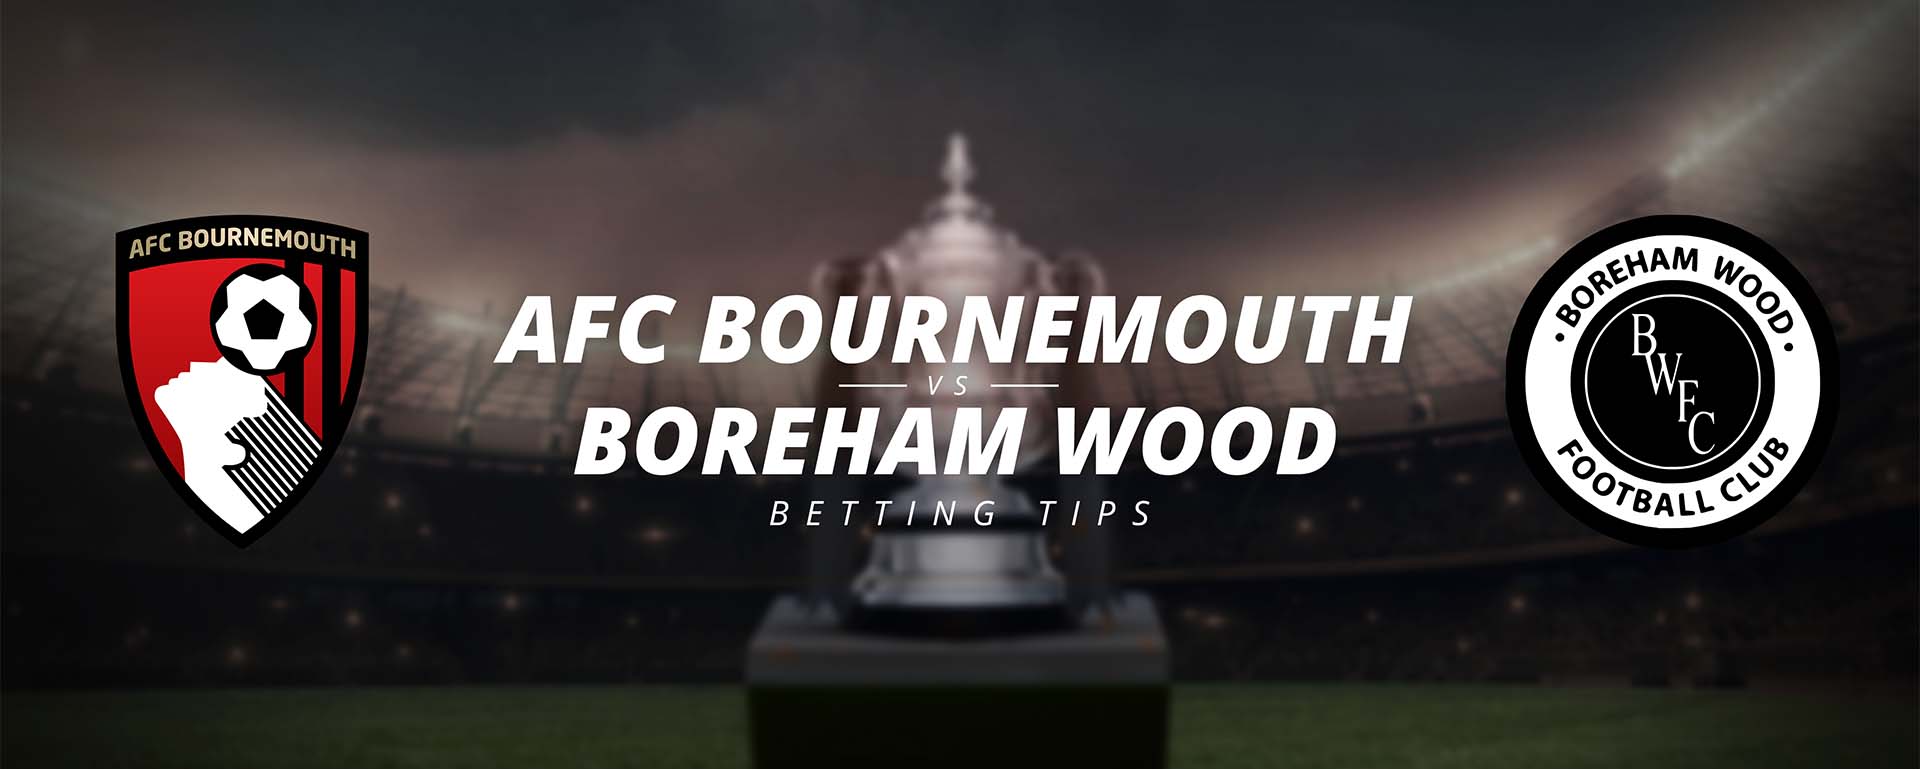 AFC BOURNEMOUTH VS BOREHAM WOOD: BETTING TIPS